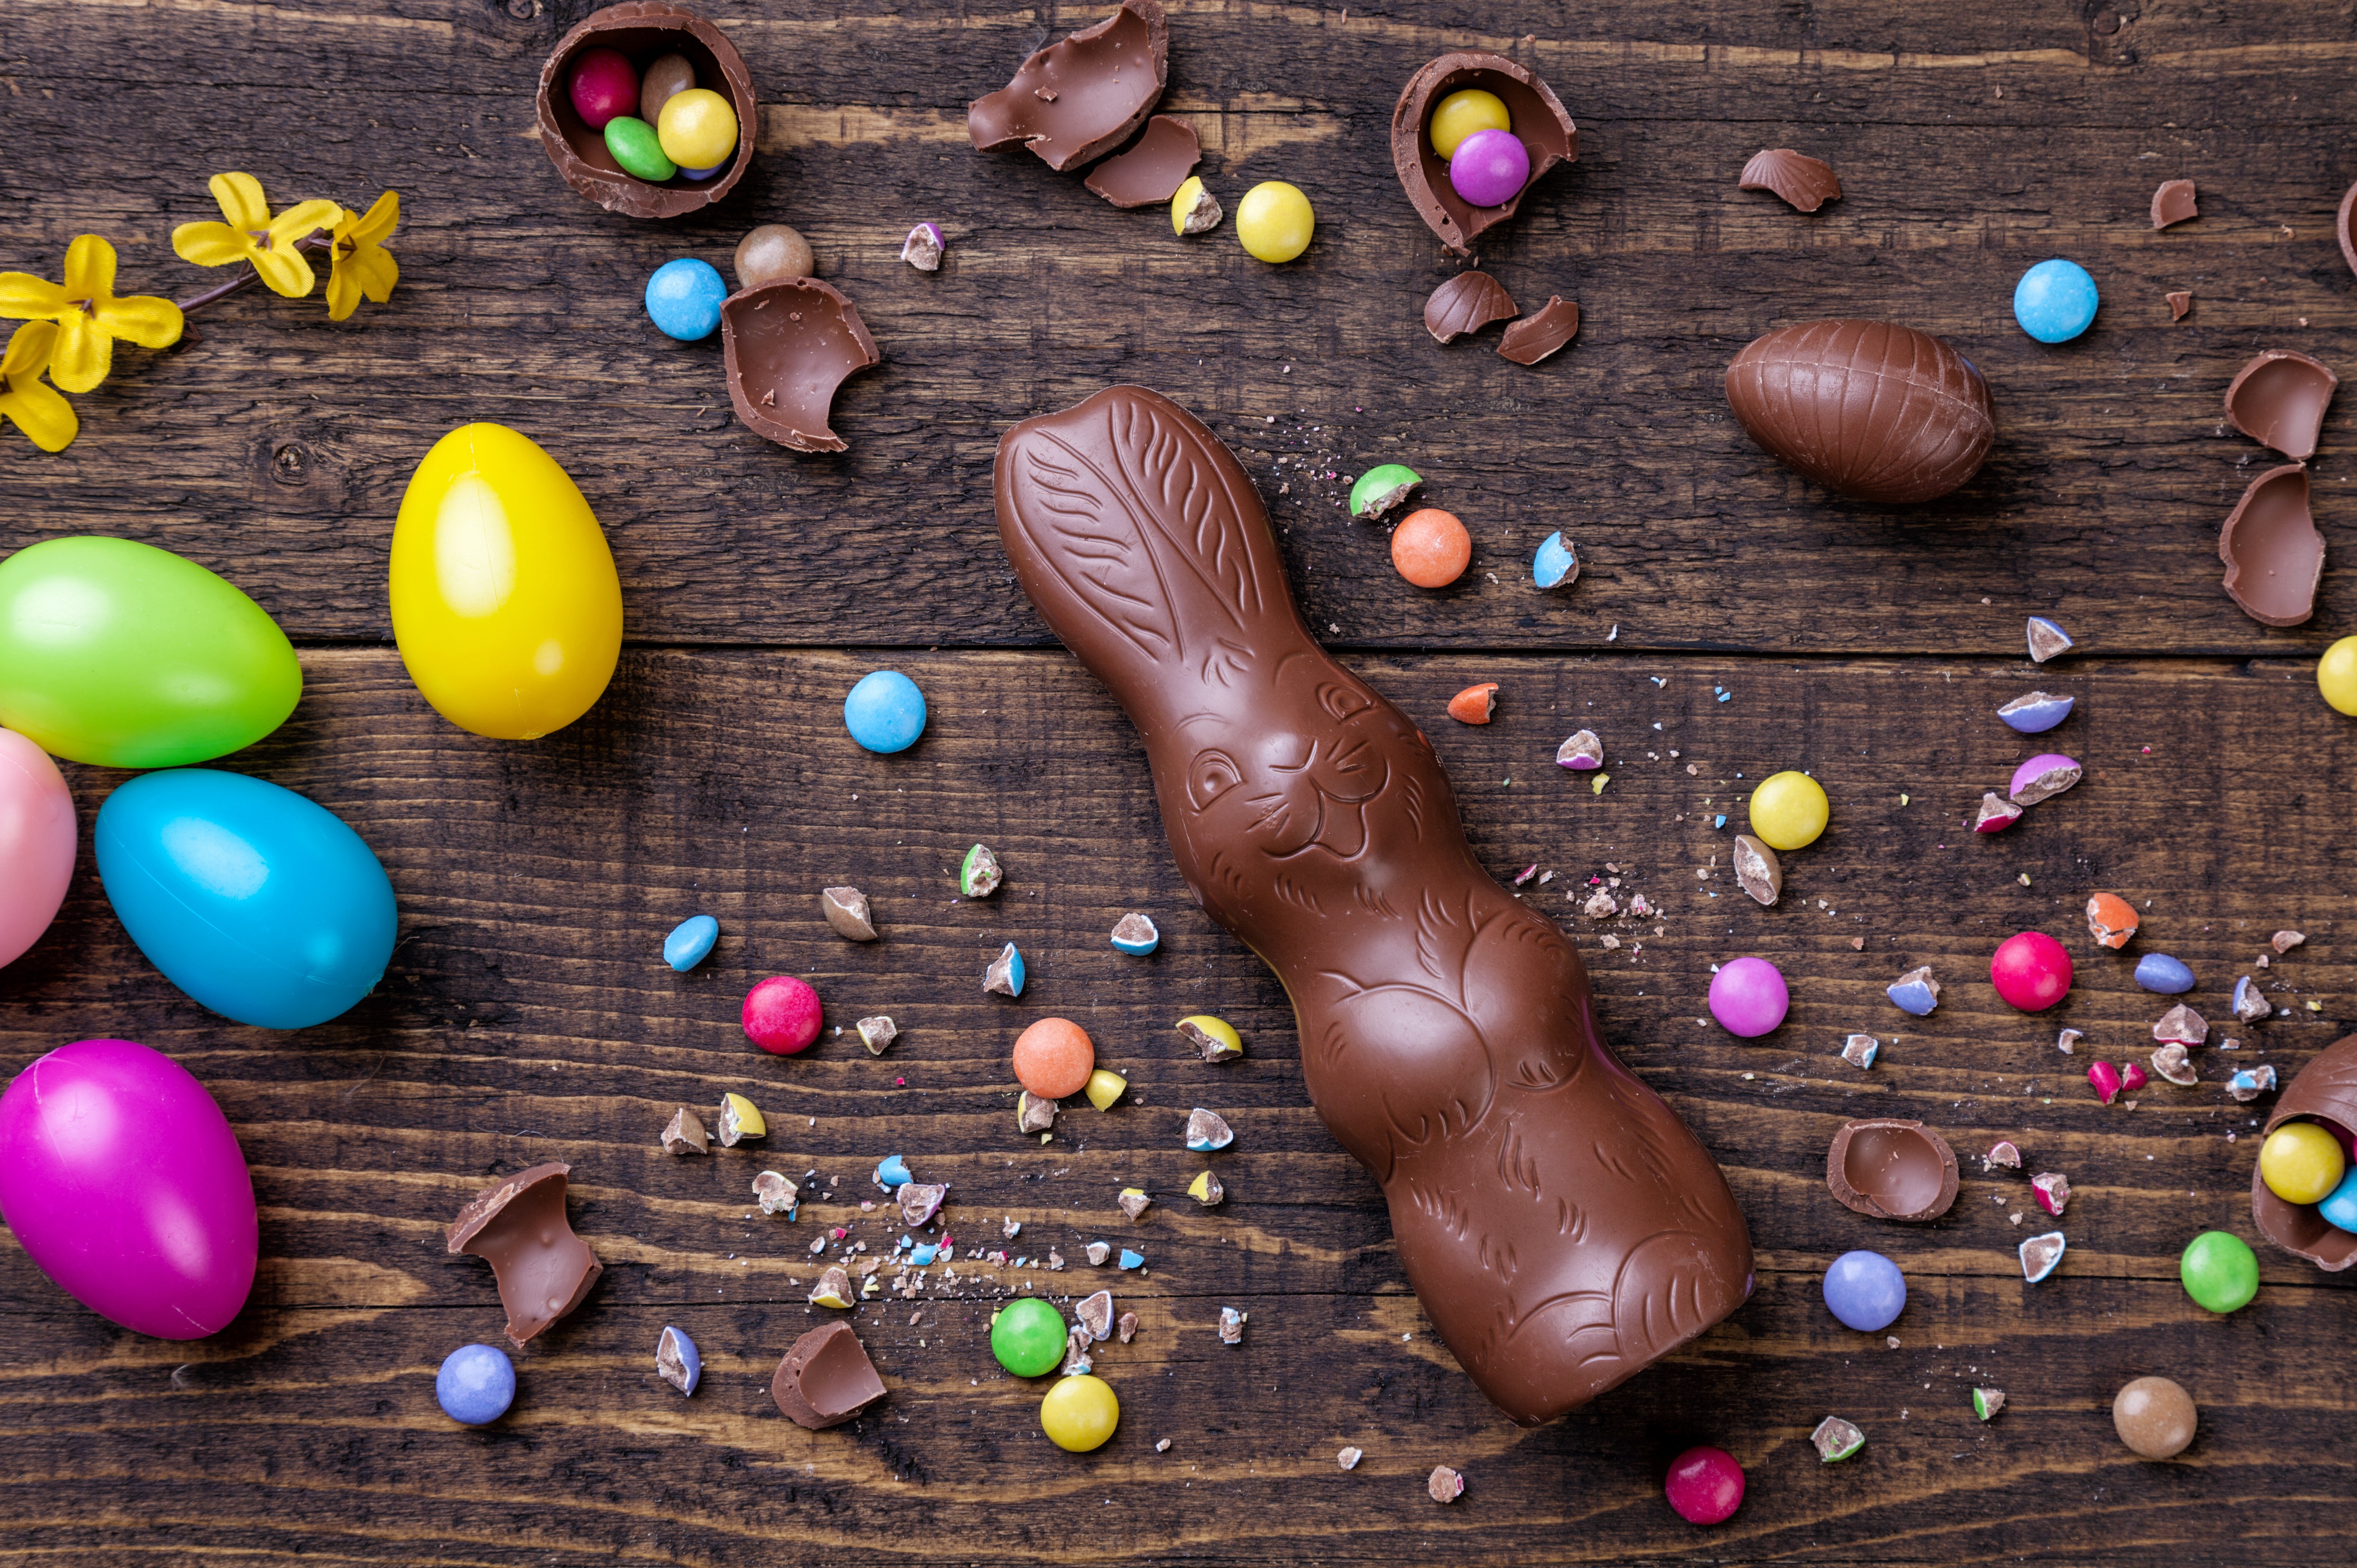 Descarga gratis la imagen Pascua, Chocolate, Día Festivo, Caramelo, Bodegón, Huevo De Pascua en el escritorio de tu PC